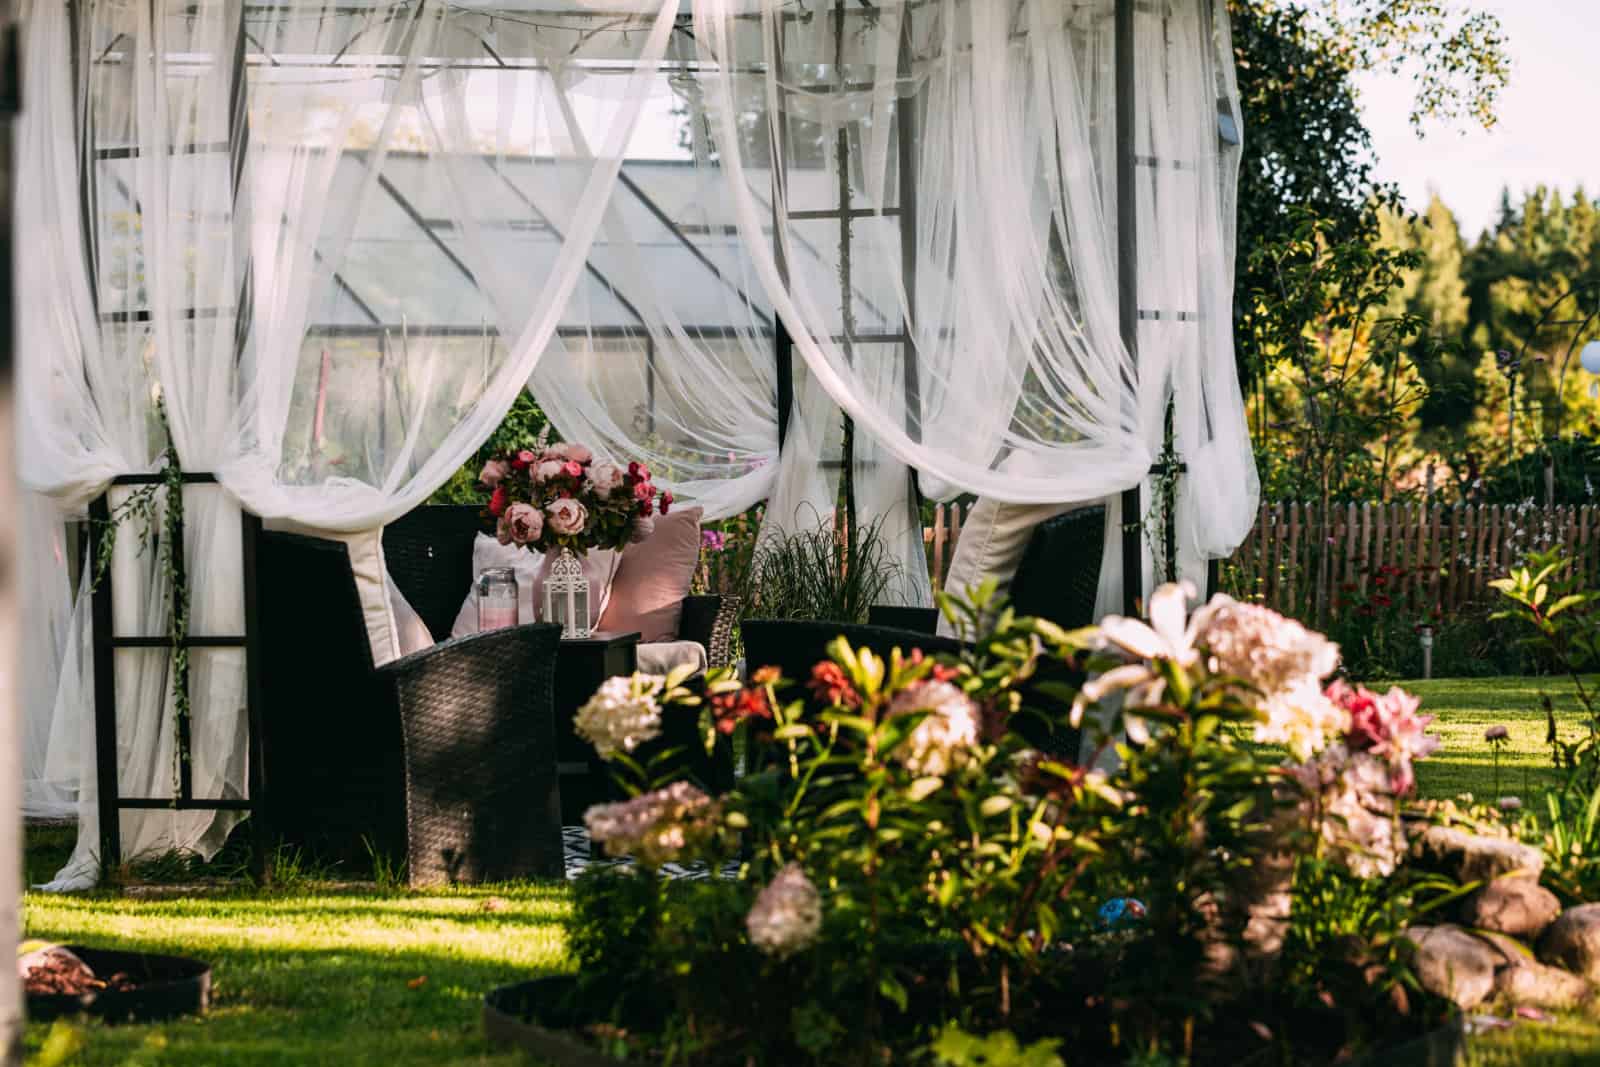 Summer canopy gazebo and flowerbeds, scandinavian style, romantic style in swedish garden